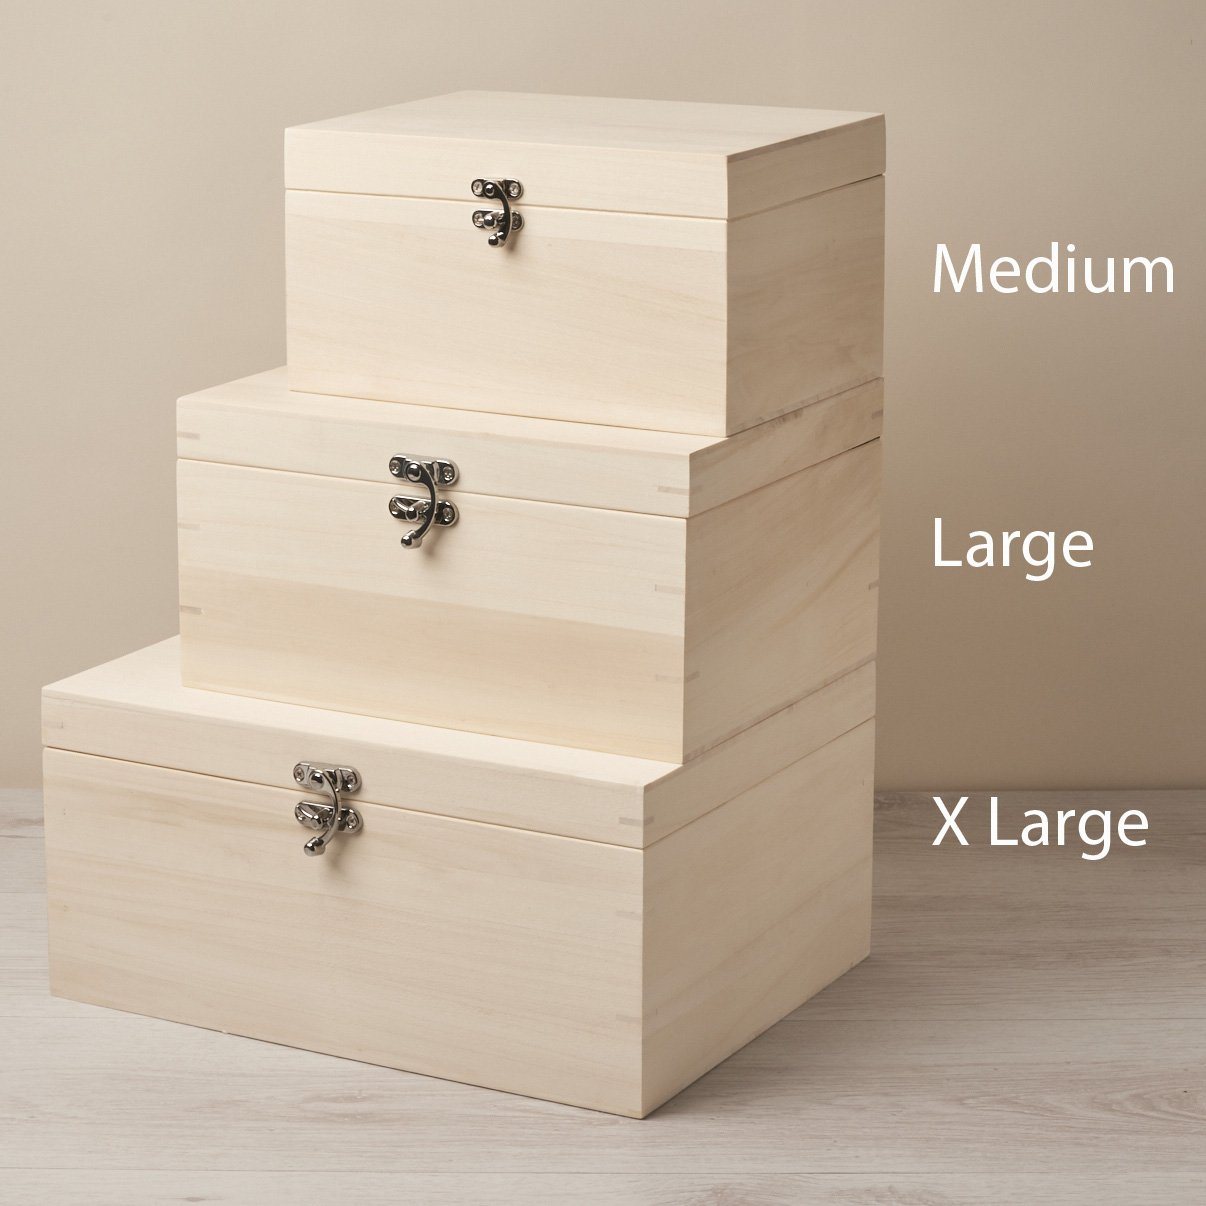 Keepsake Box - Laser Engraved Wooden Memory Keepsake Box With Hinged Lid - Love